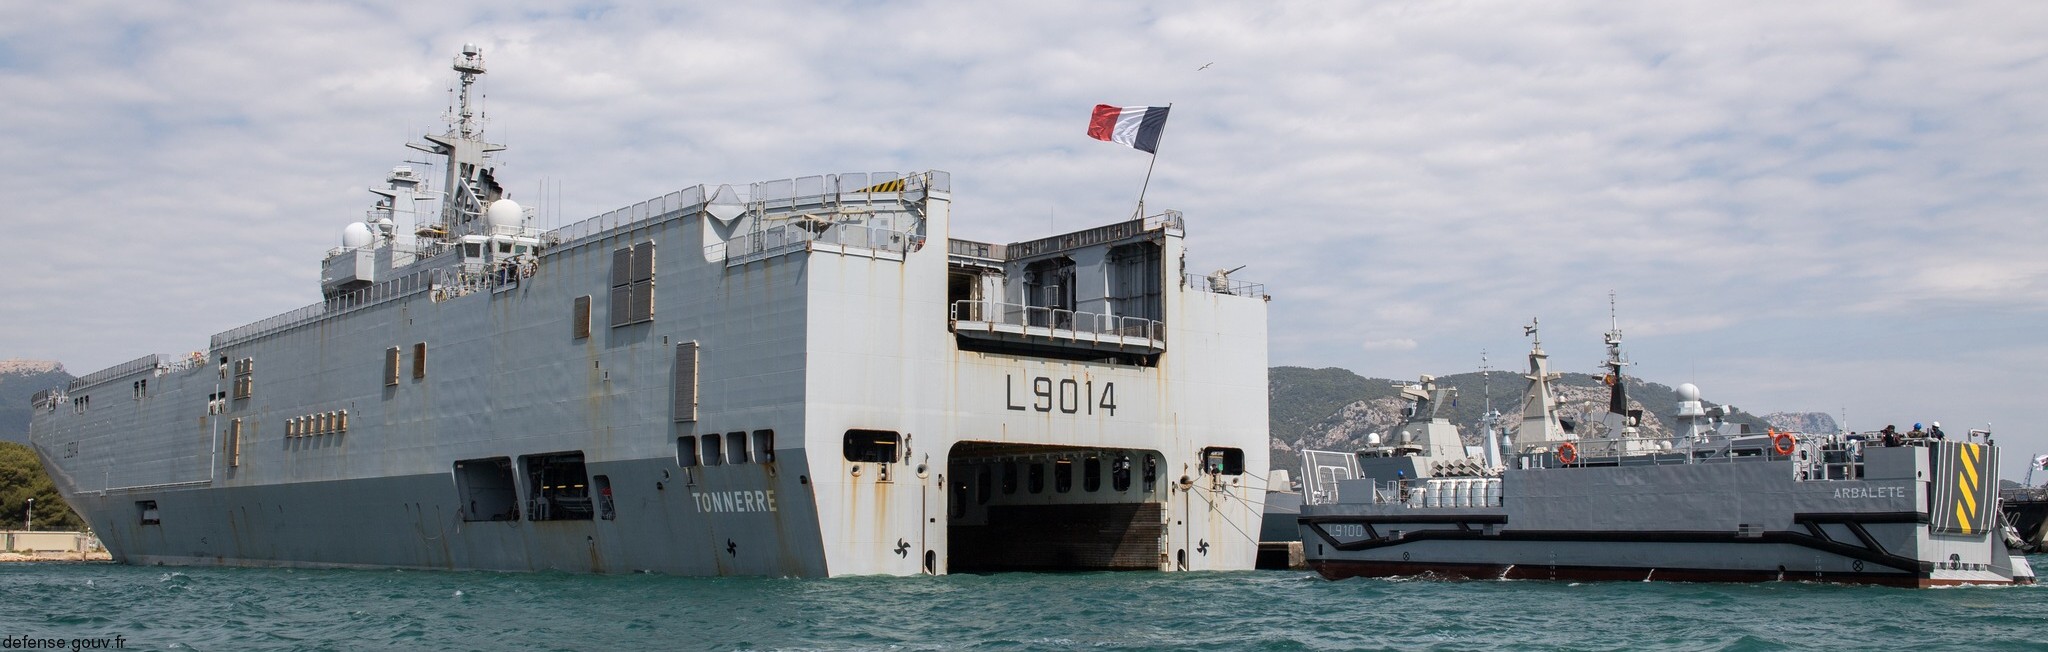 l-9014 fs tonnere mistral class amphibious assault command ship bpc french navy marine nationale 32